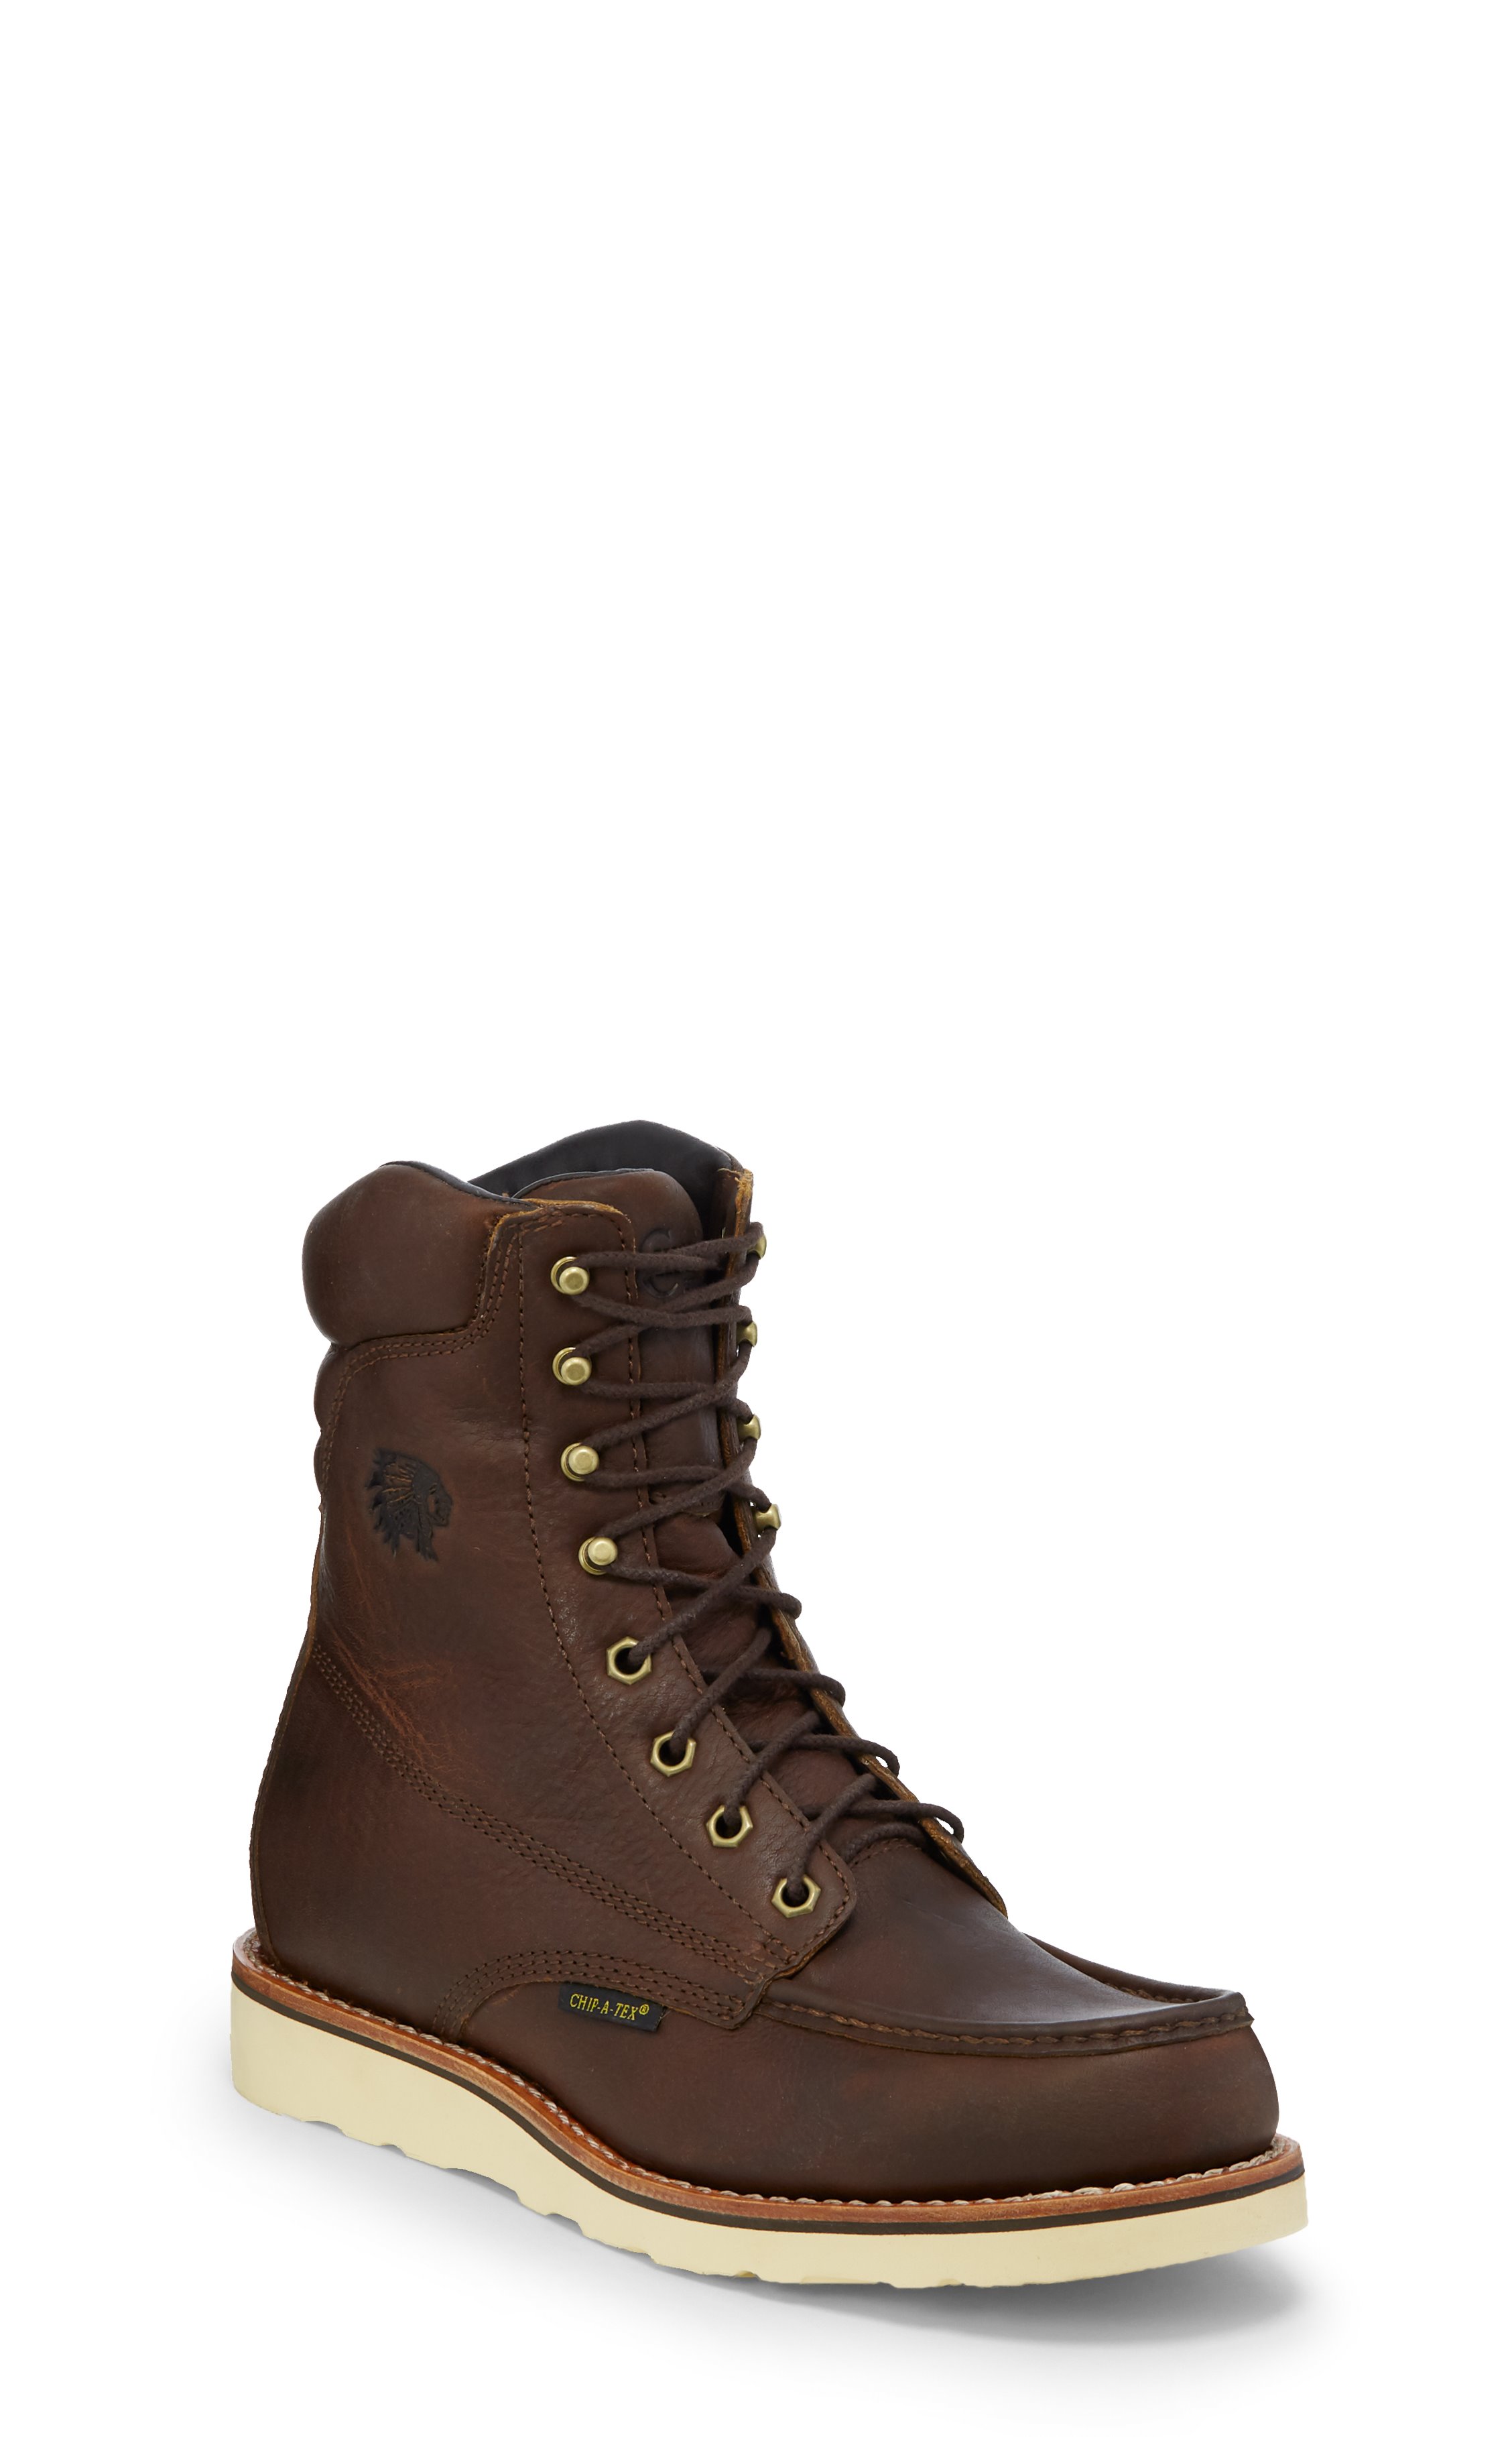 chippewa boots wedge sole